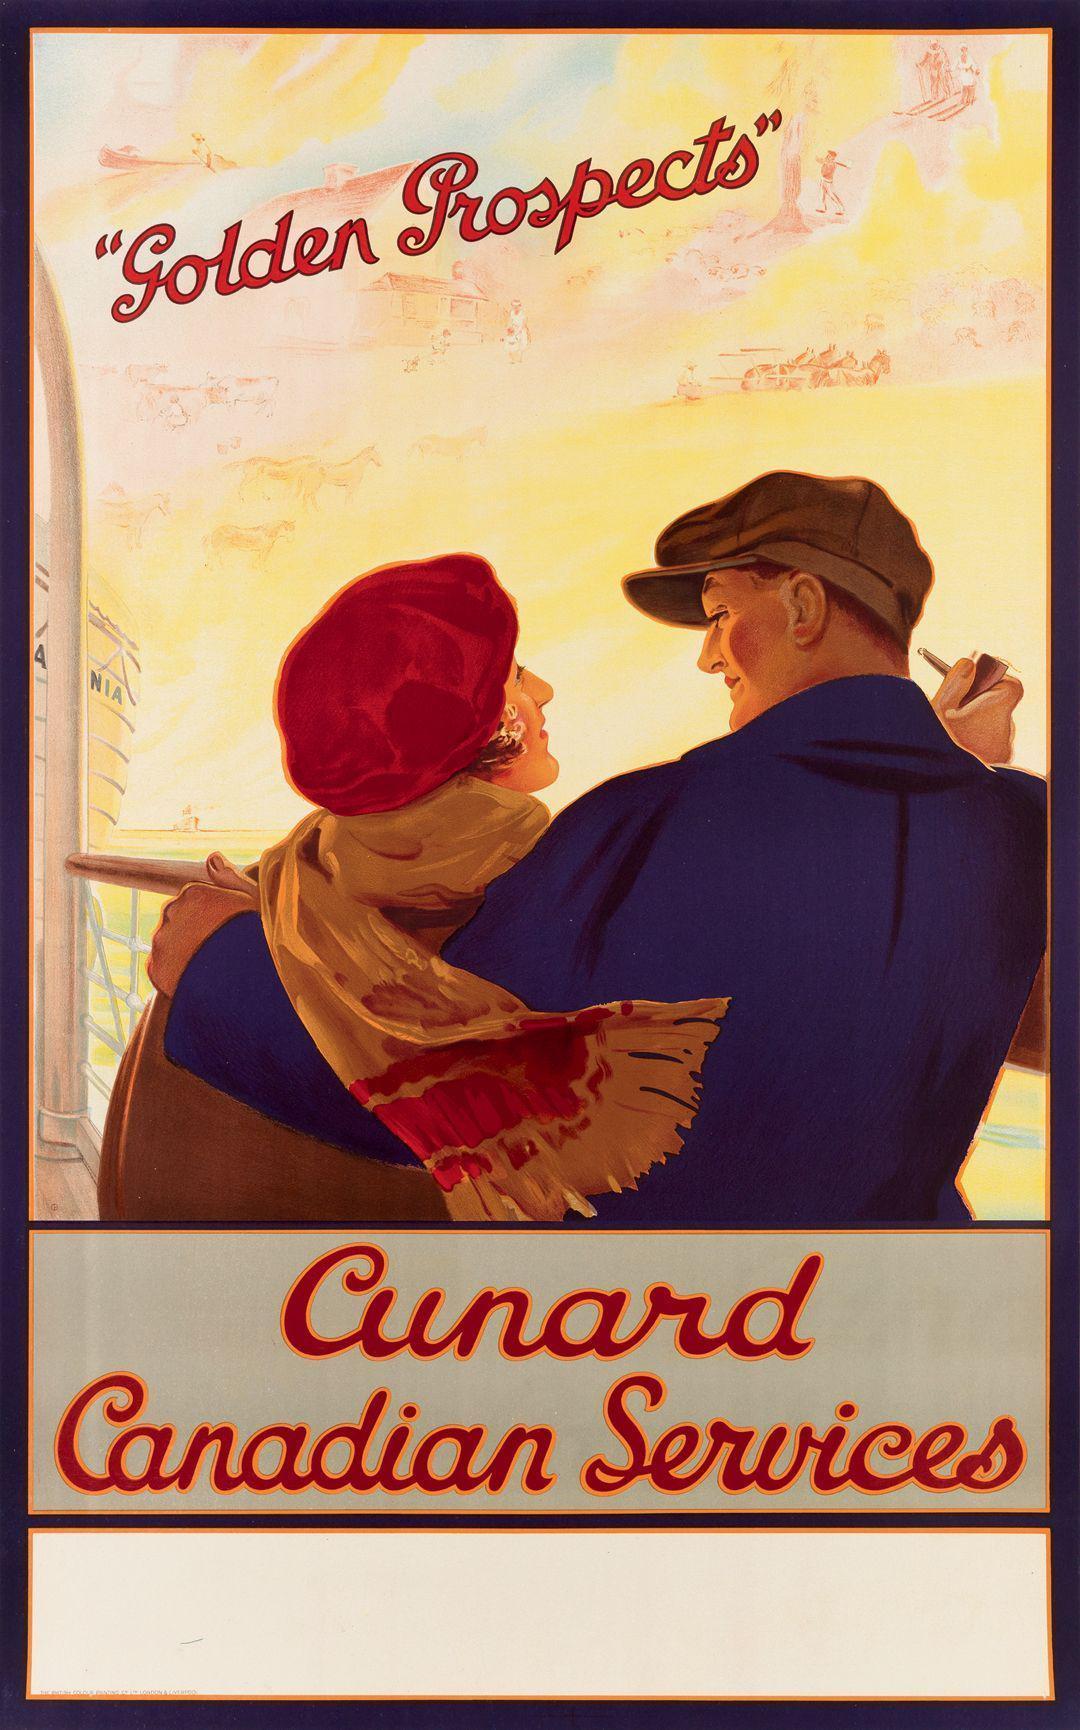 Original Cunard Poster c1925 - Golden Prospects Canadian Services